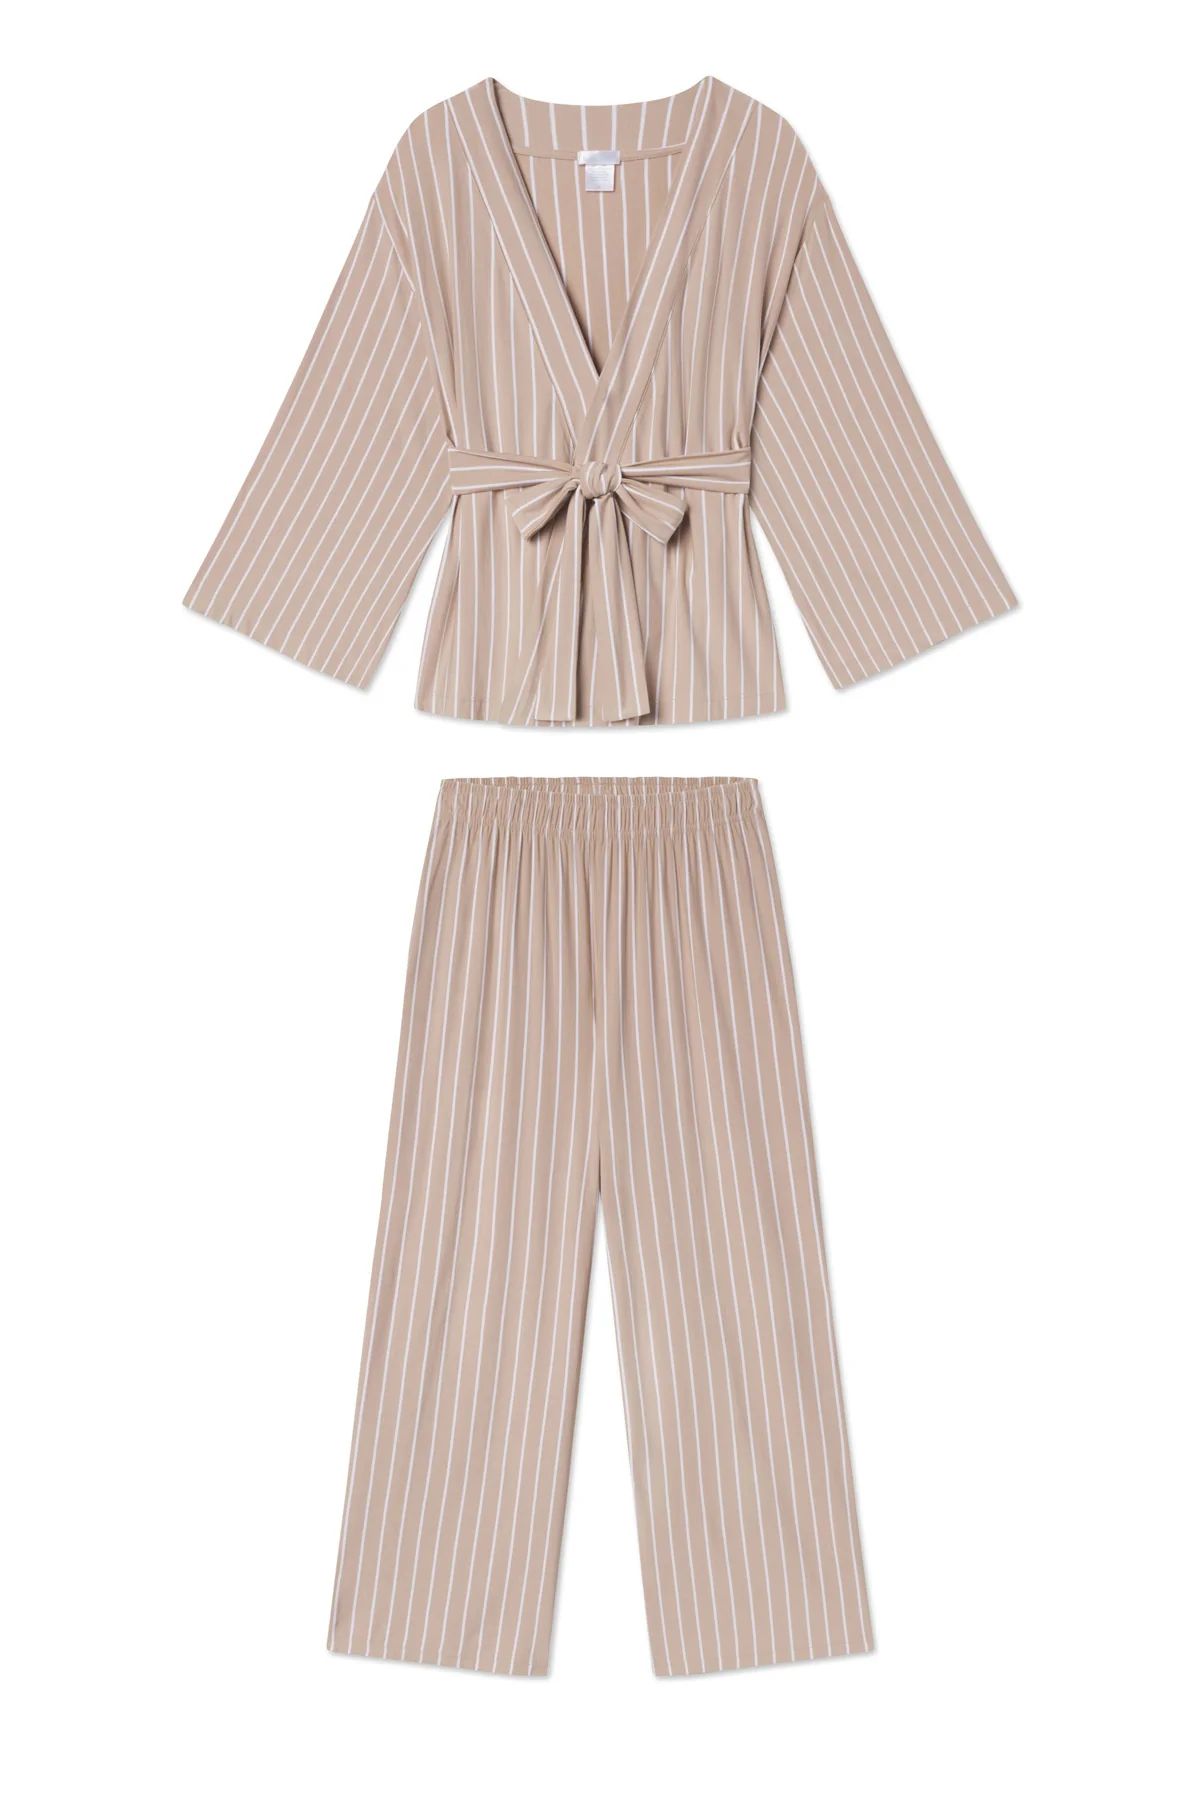 DreamKnit Kimono Pajama Set in Driftwood Stripe | Lake Pajamas